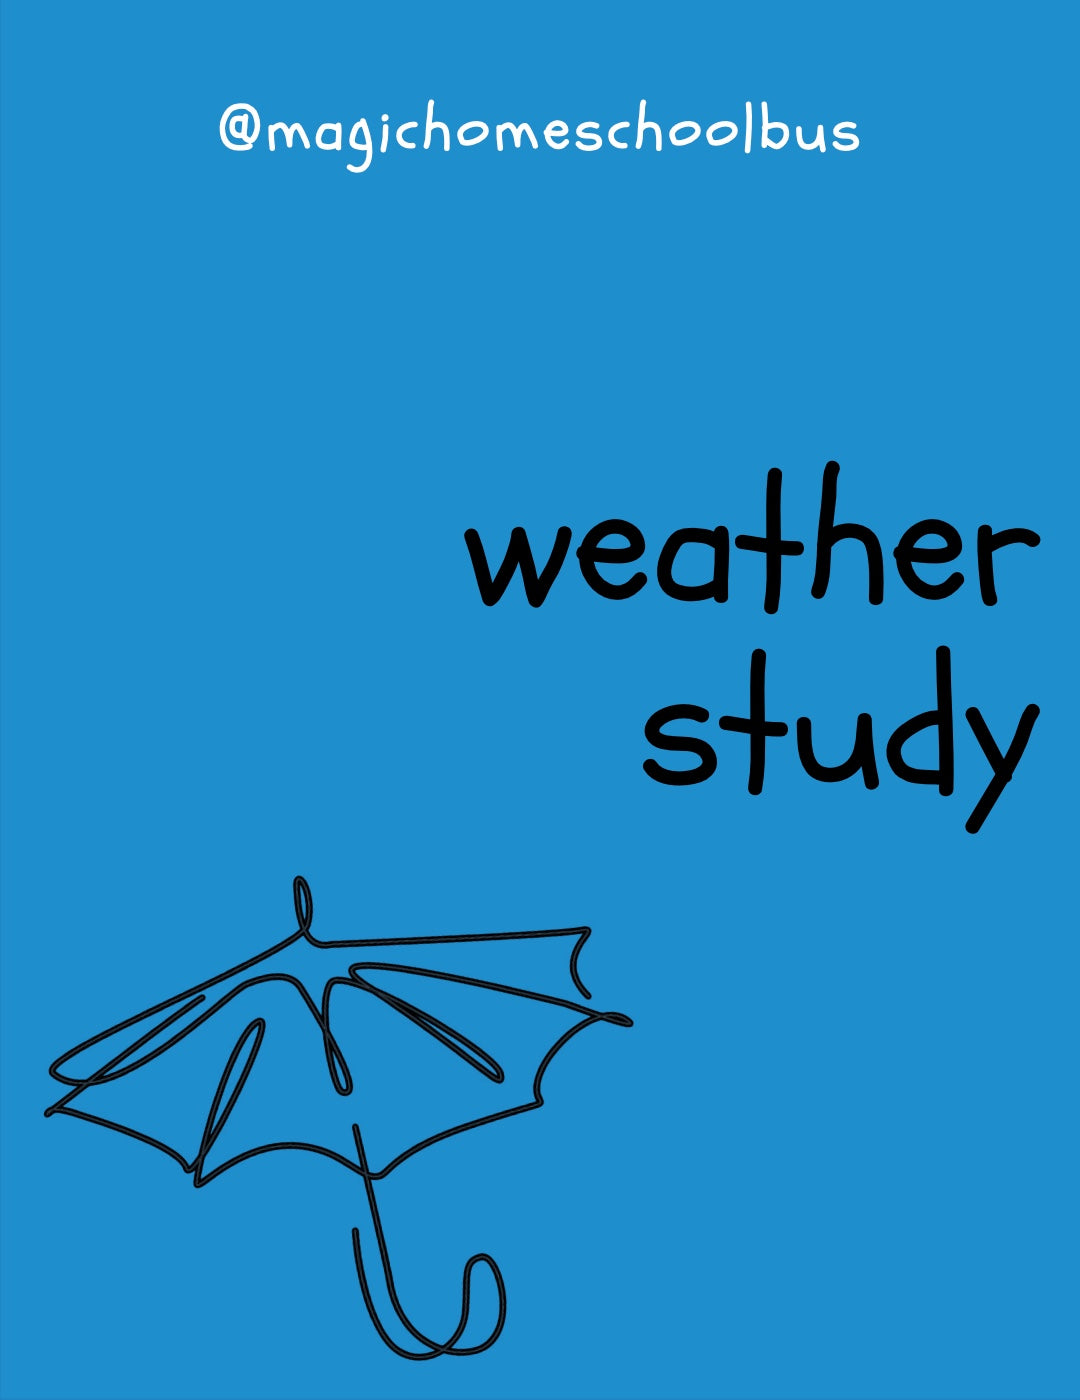 Magic Homeschool Bus - Weather Study